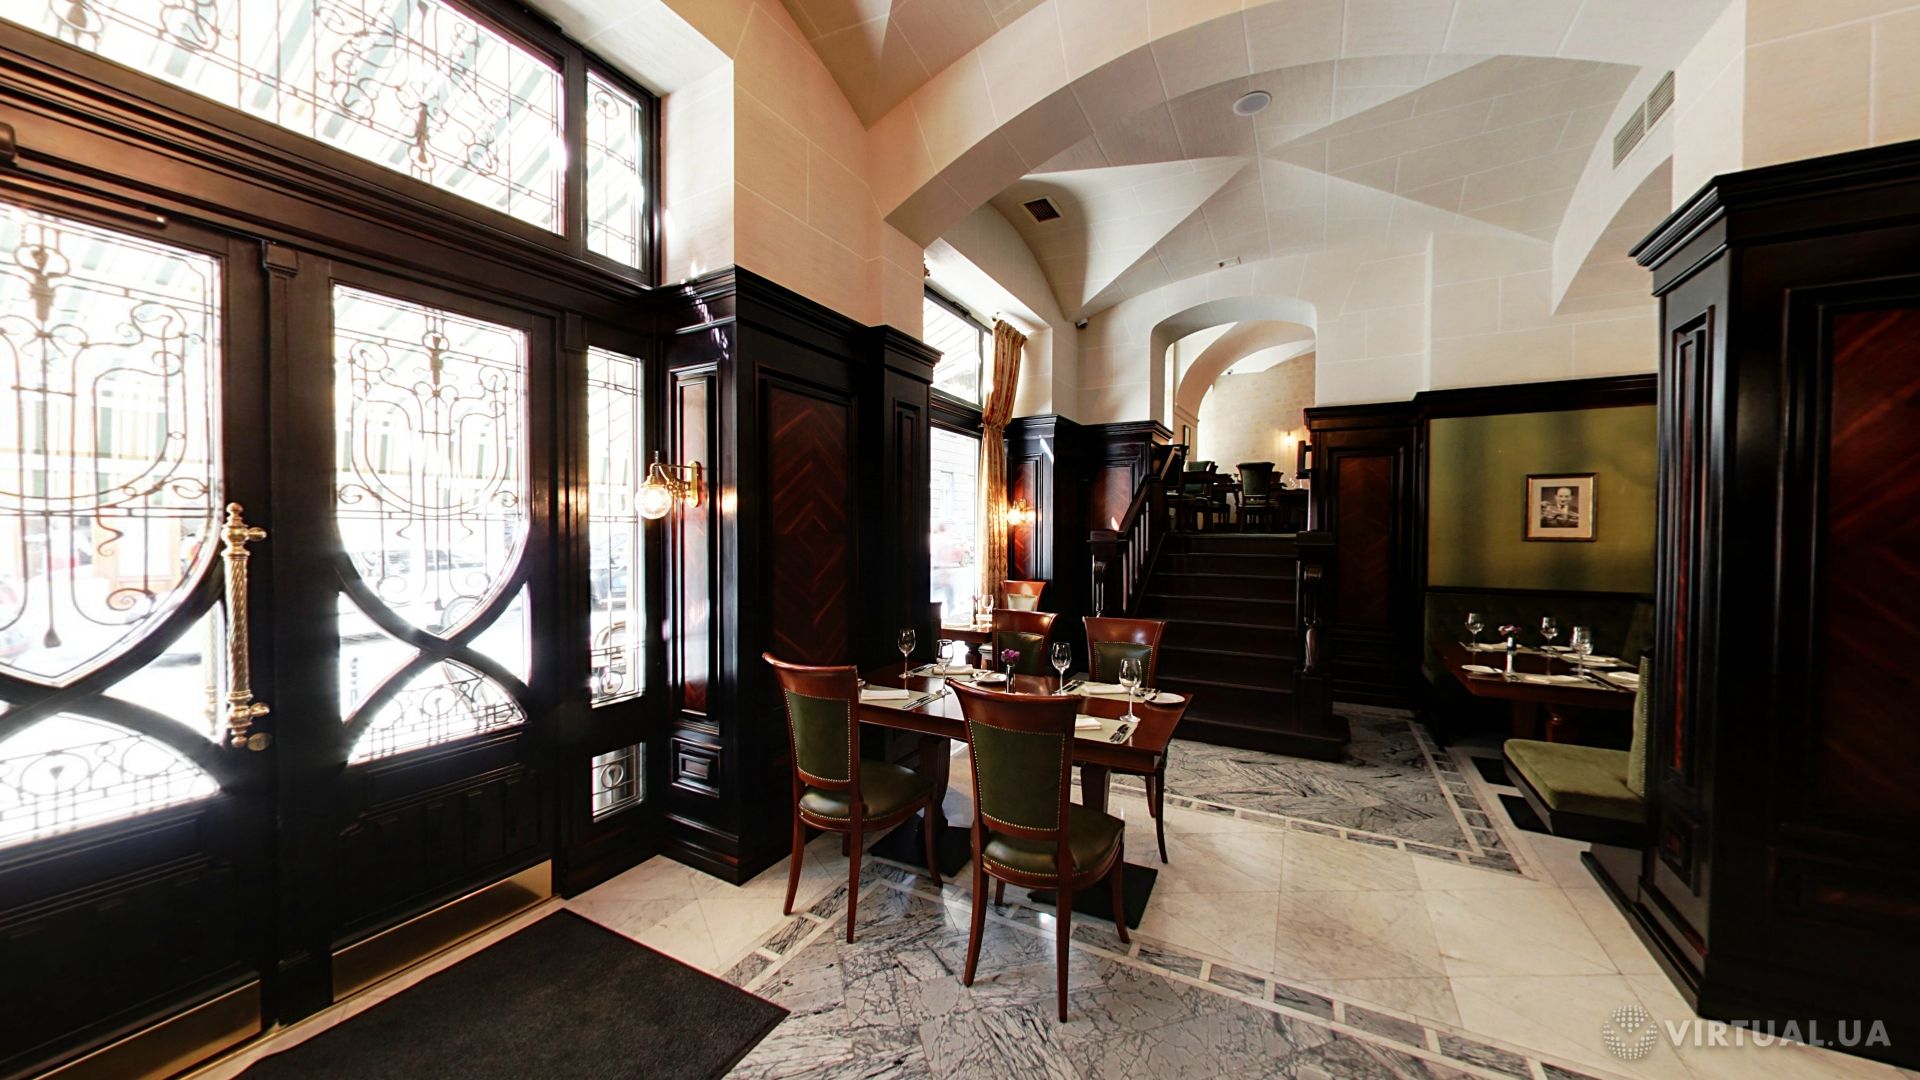 Szkocka Restaurant & Bar, photo